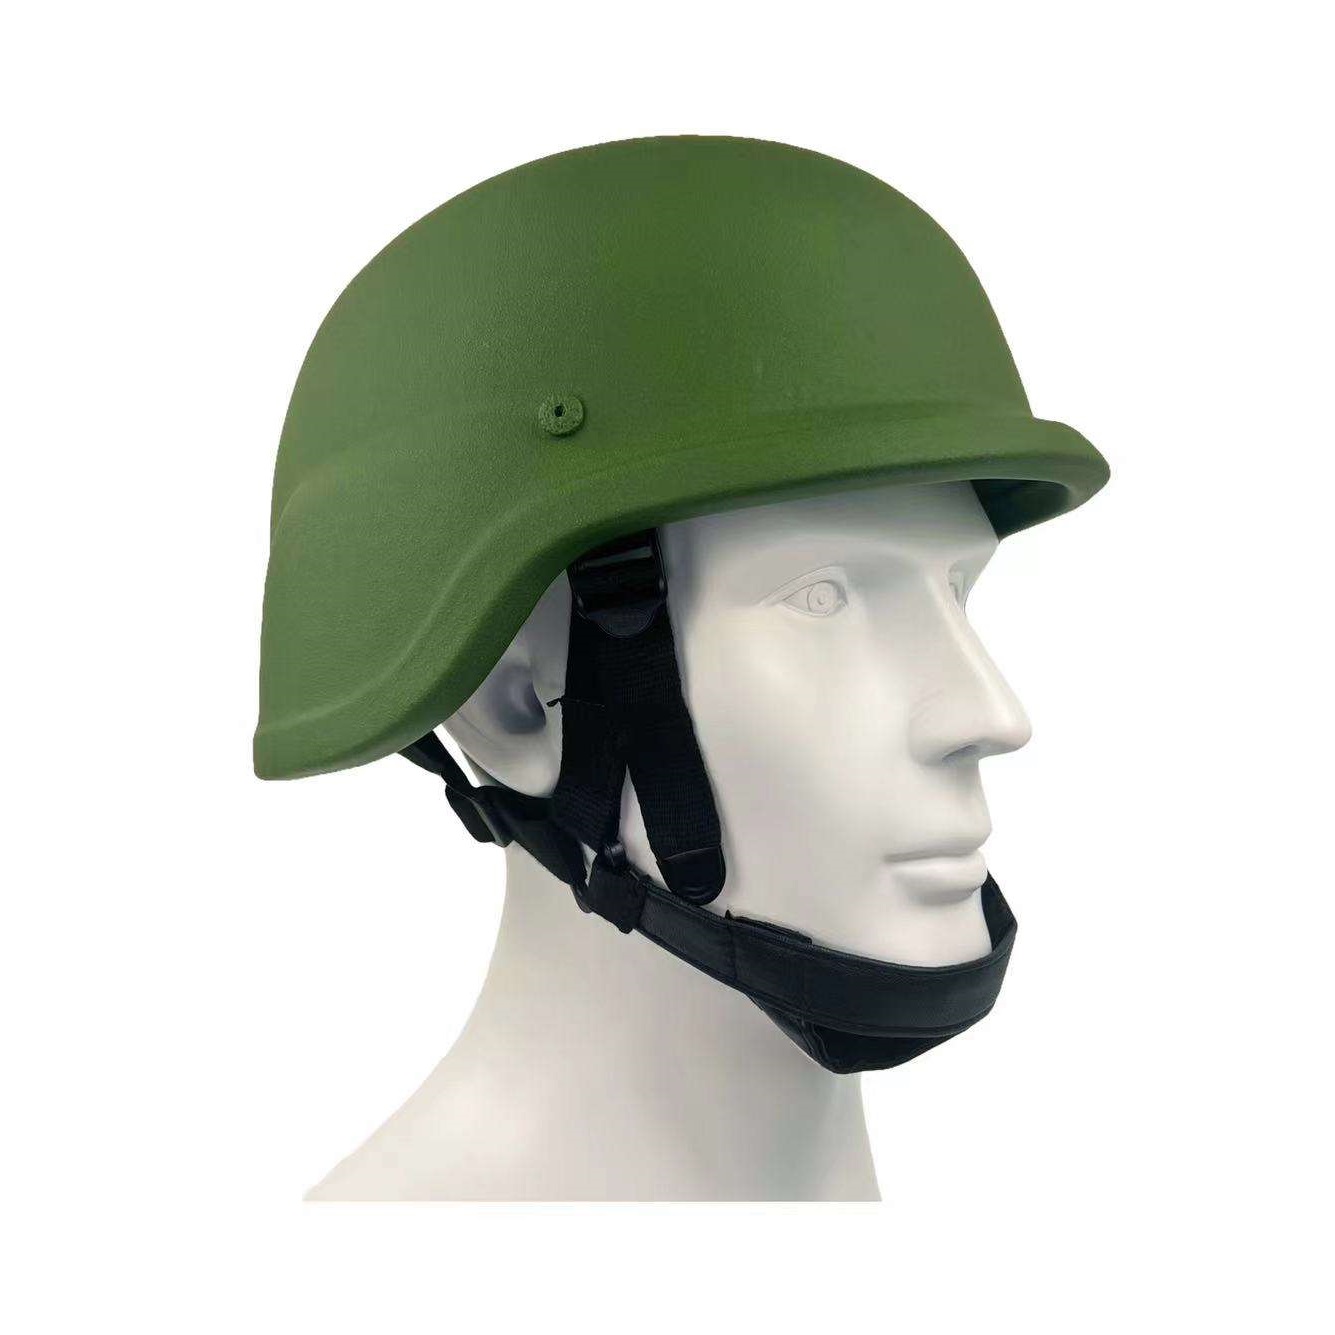 PASGT military Bulletproof combat helmet